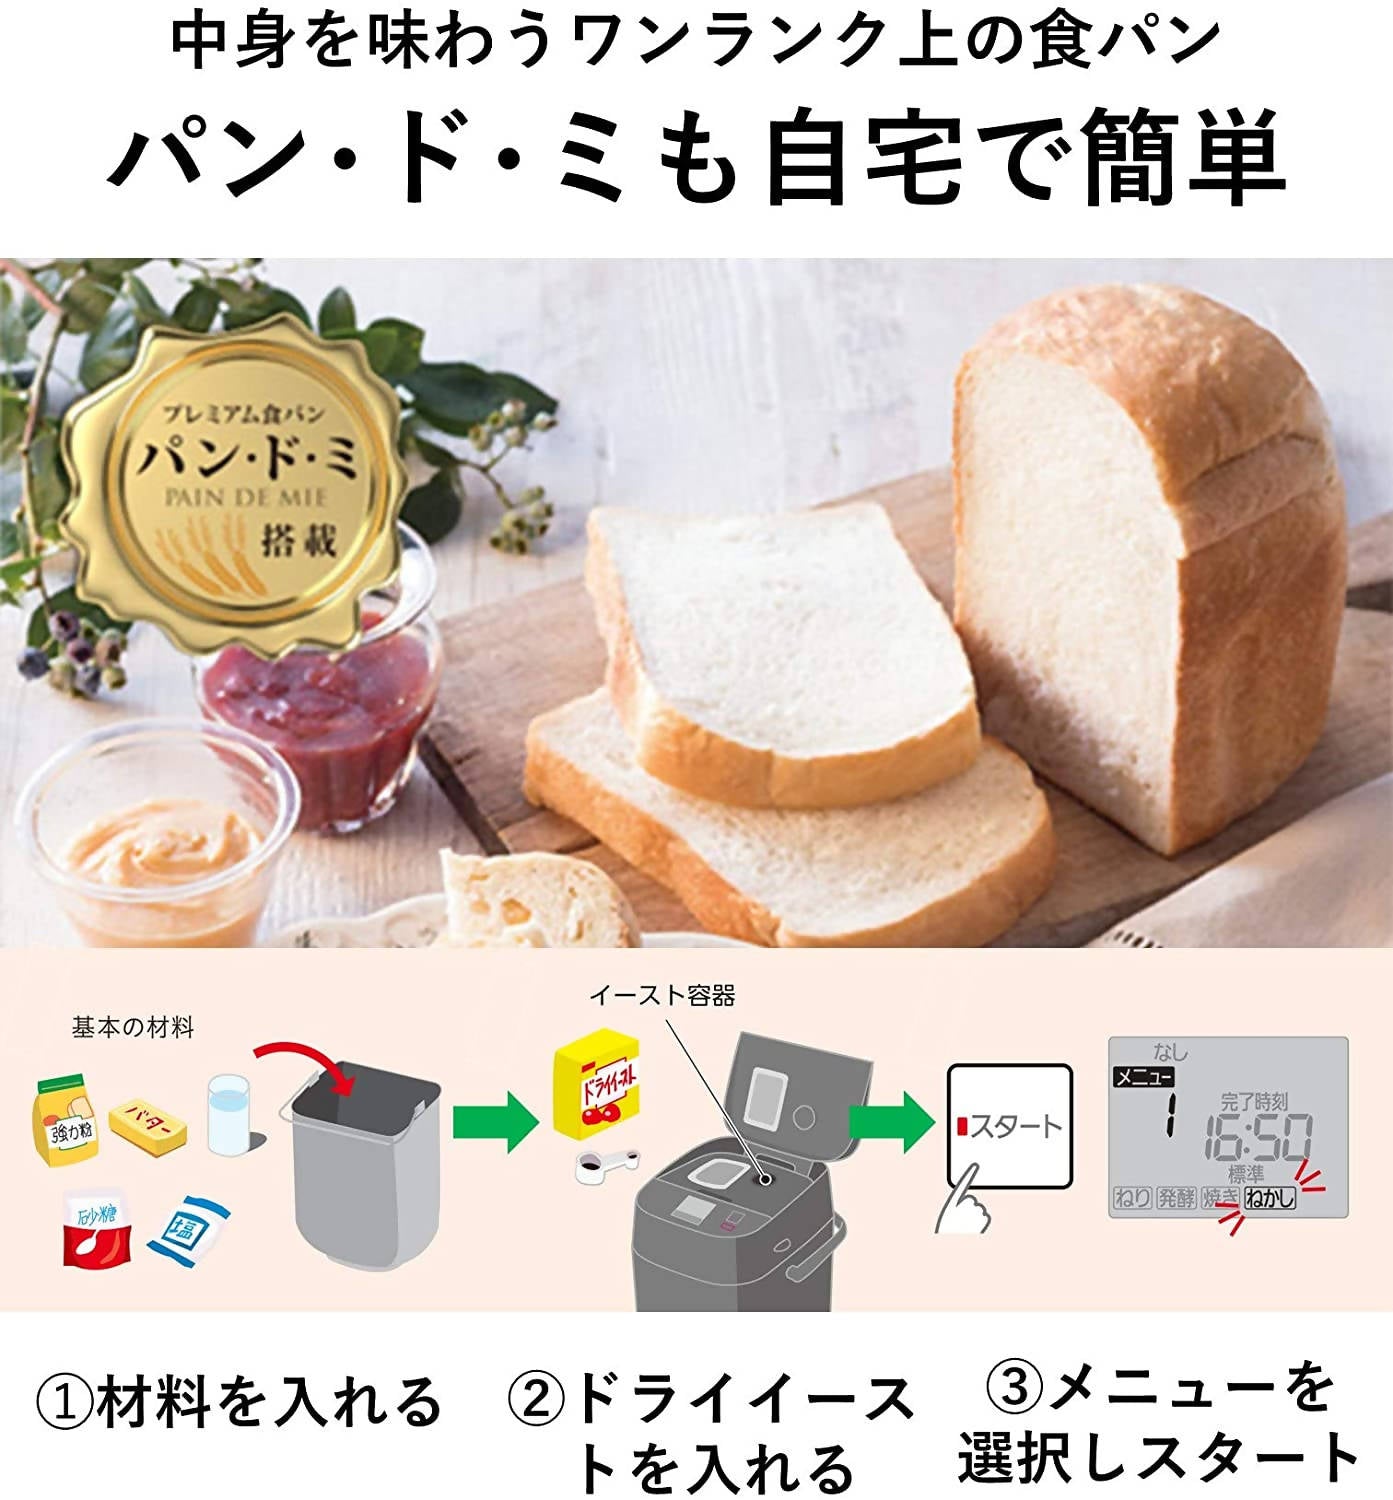 Panasonic SD-MDX102-K Home Bread Maker